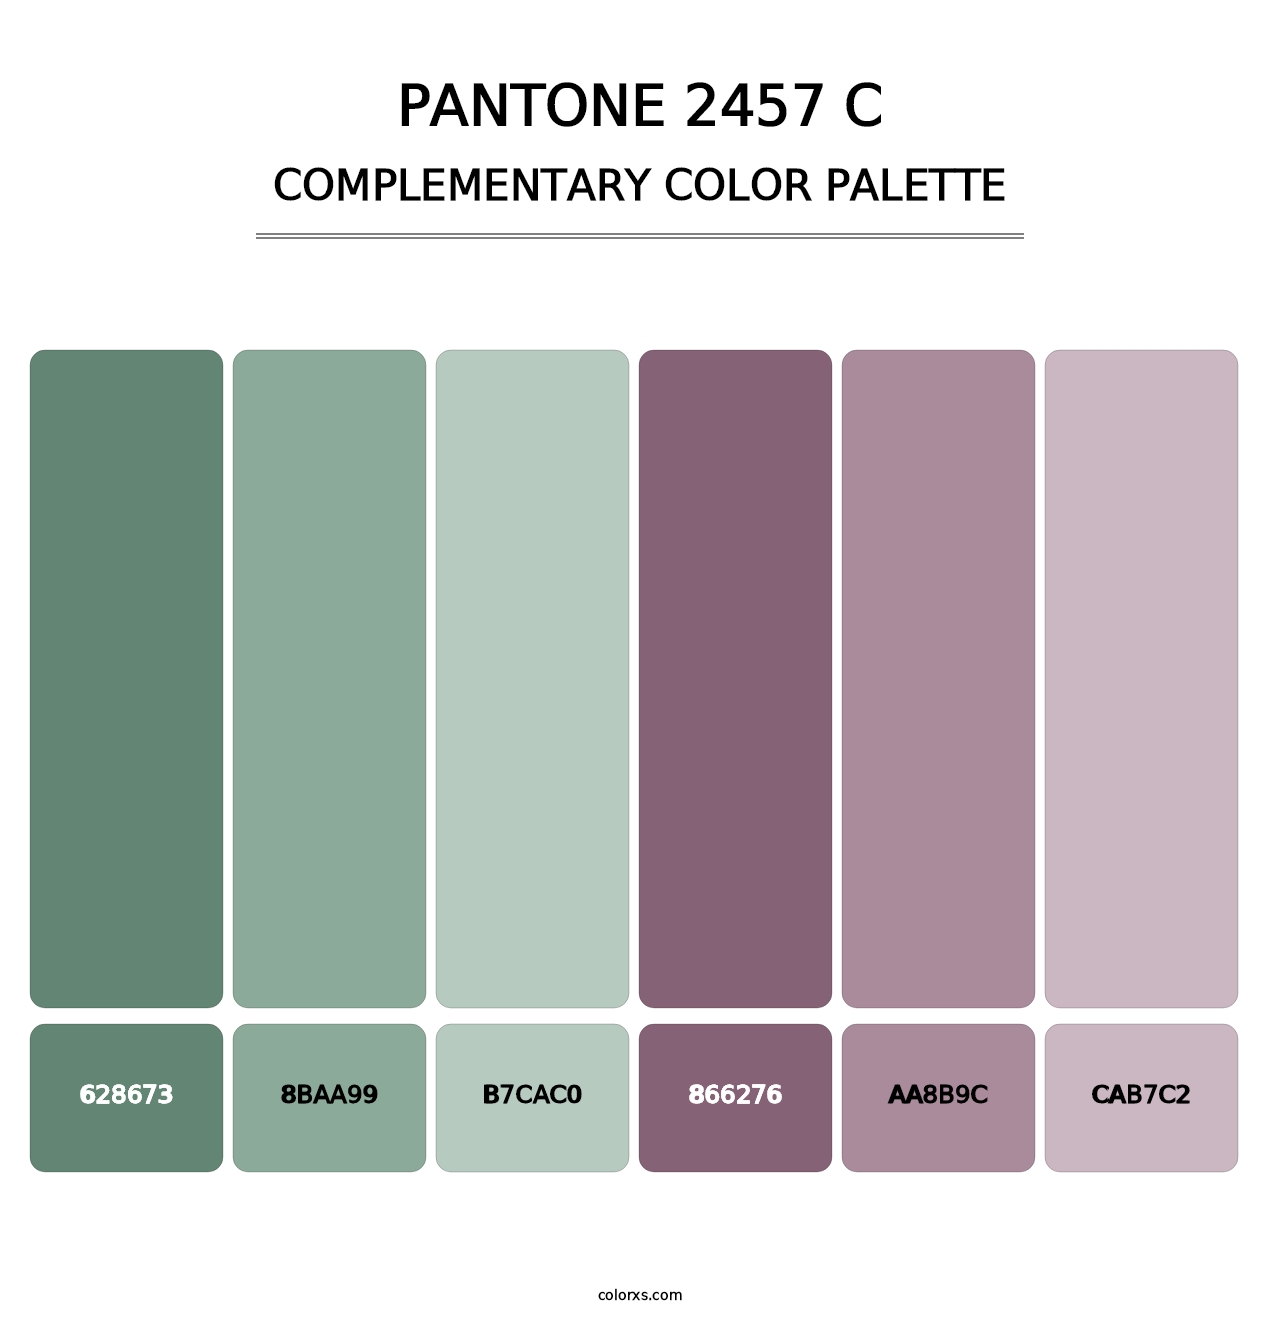 PANTONE 2457 C - Complementary Color Palette